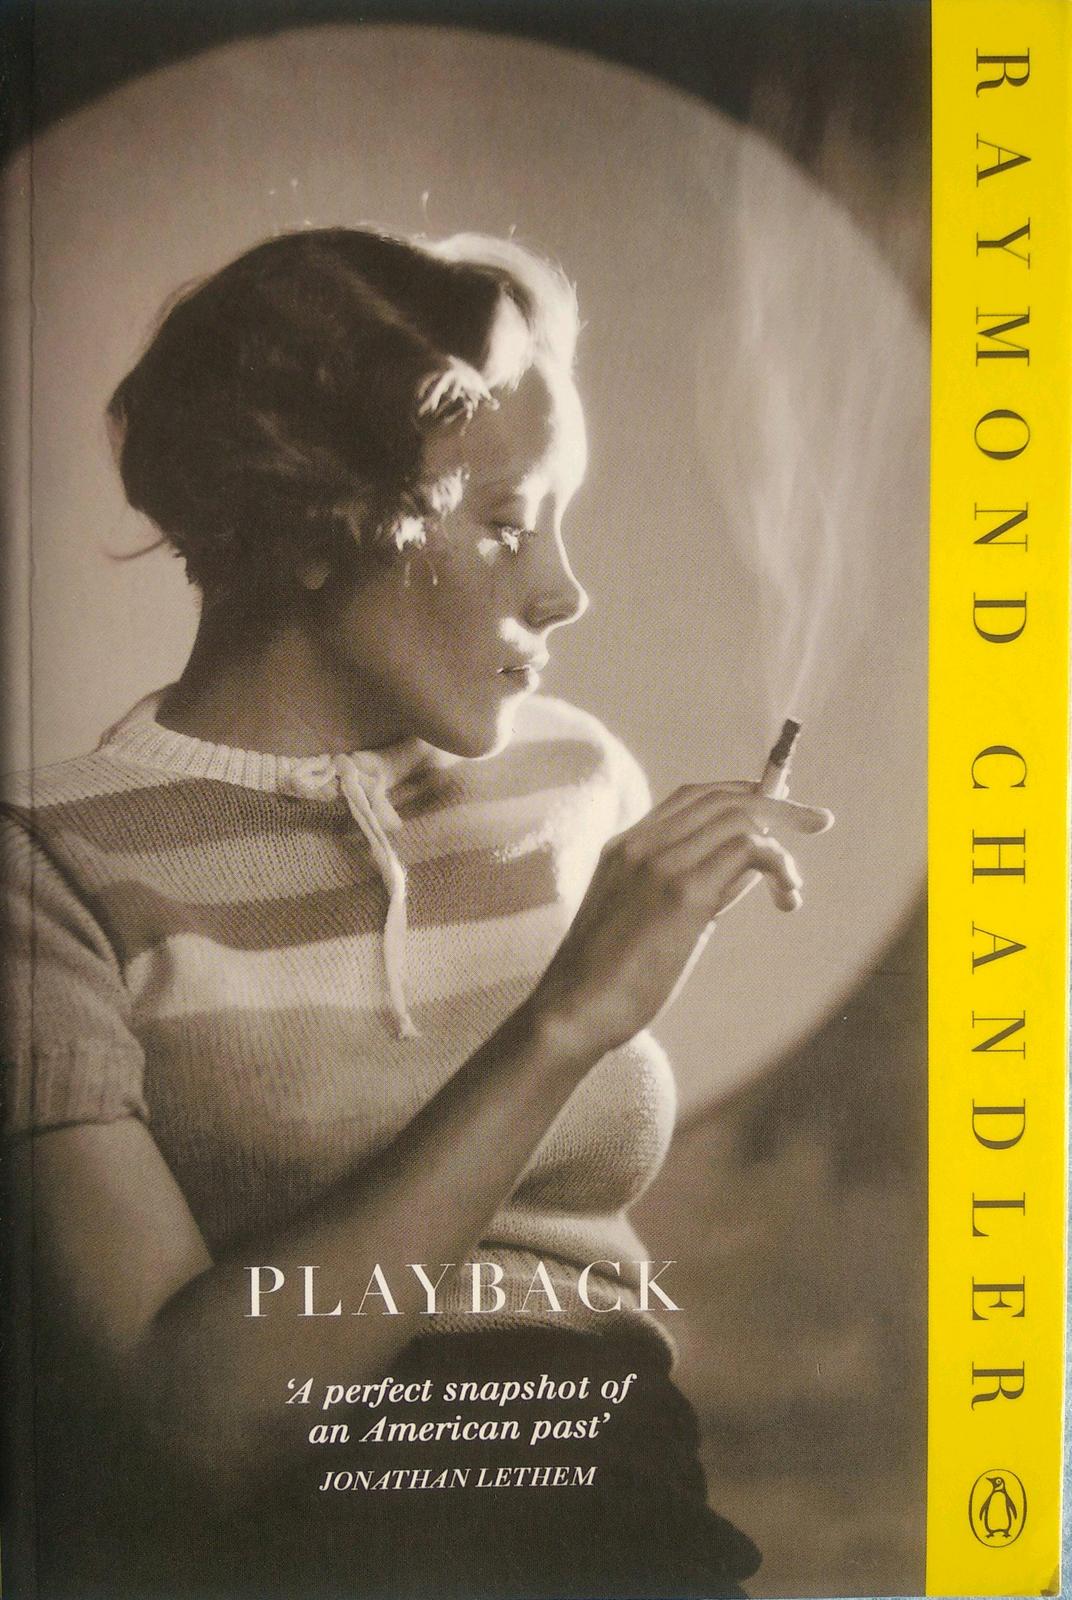 Raymond Chandler: Playback (2011)